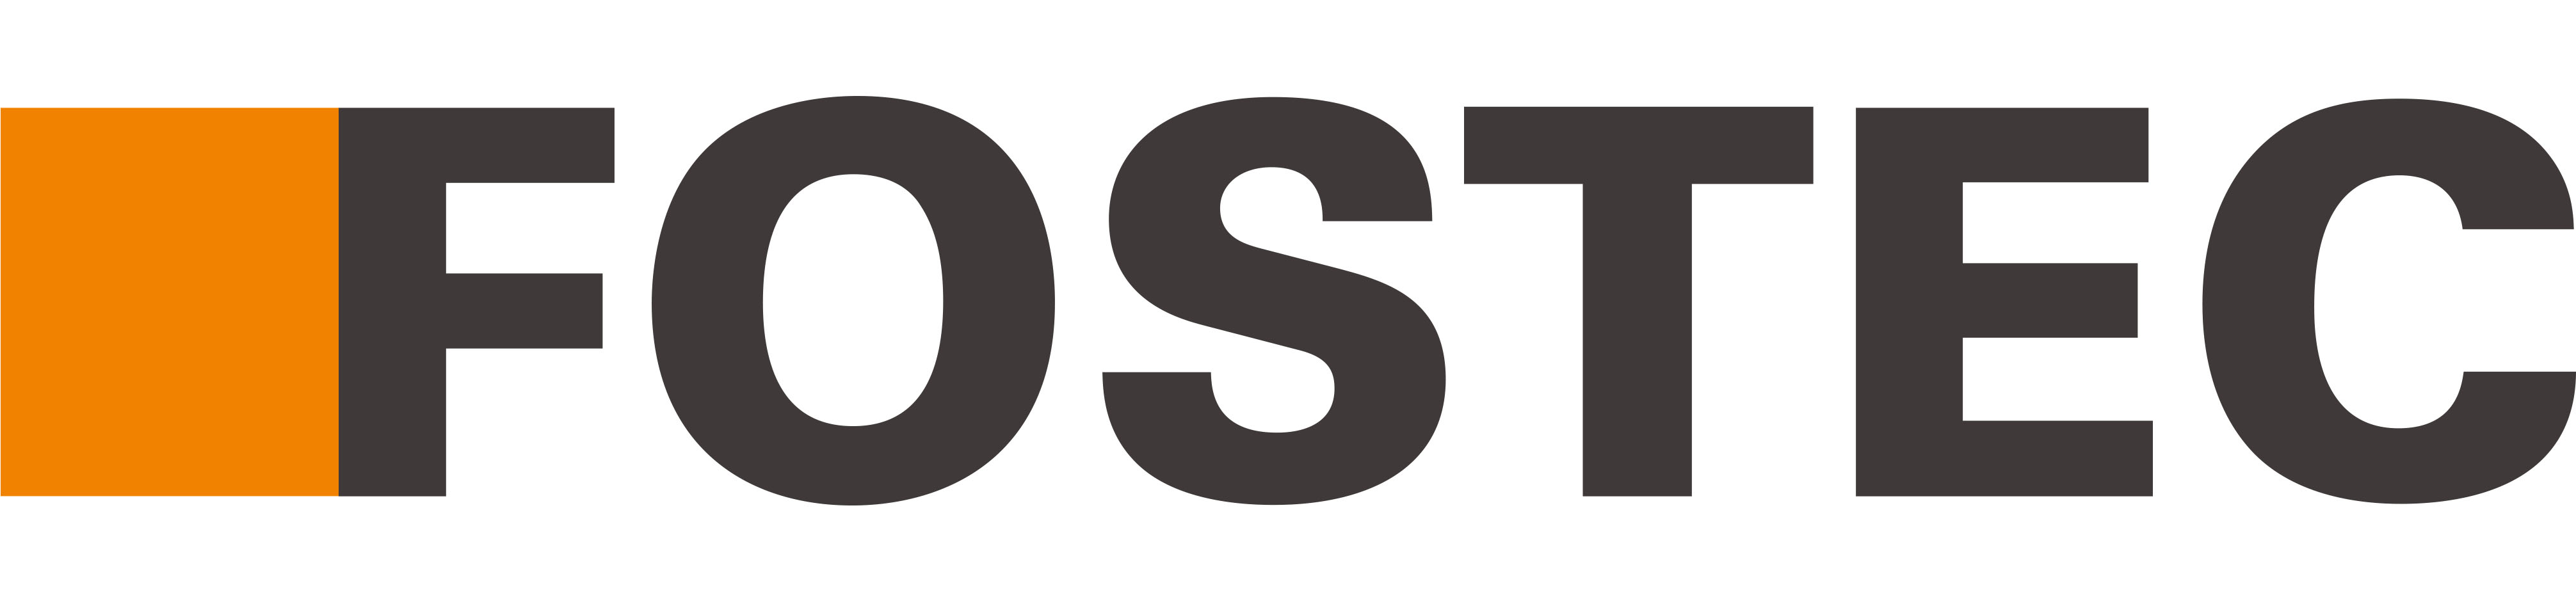 Fostec Co., Ltd.